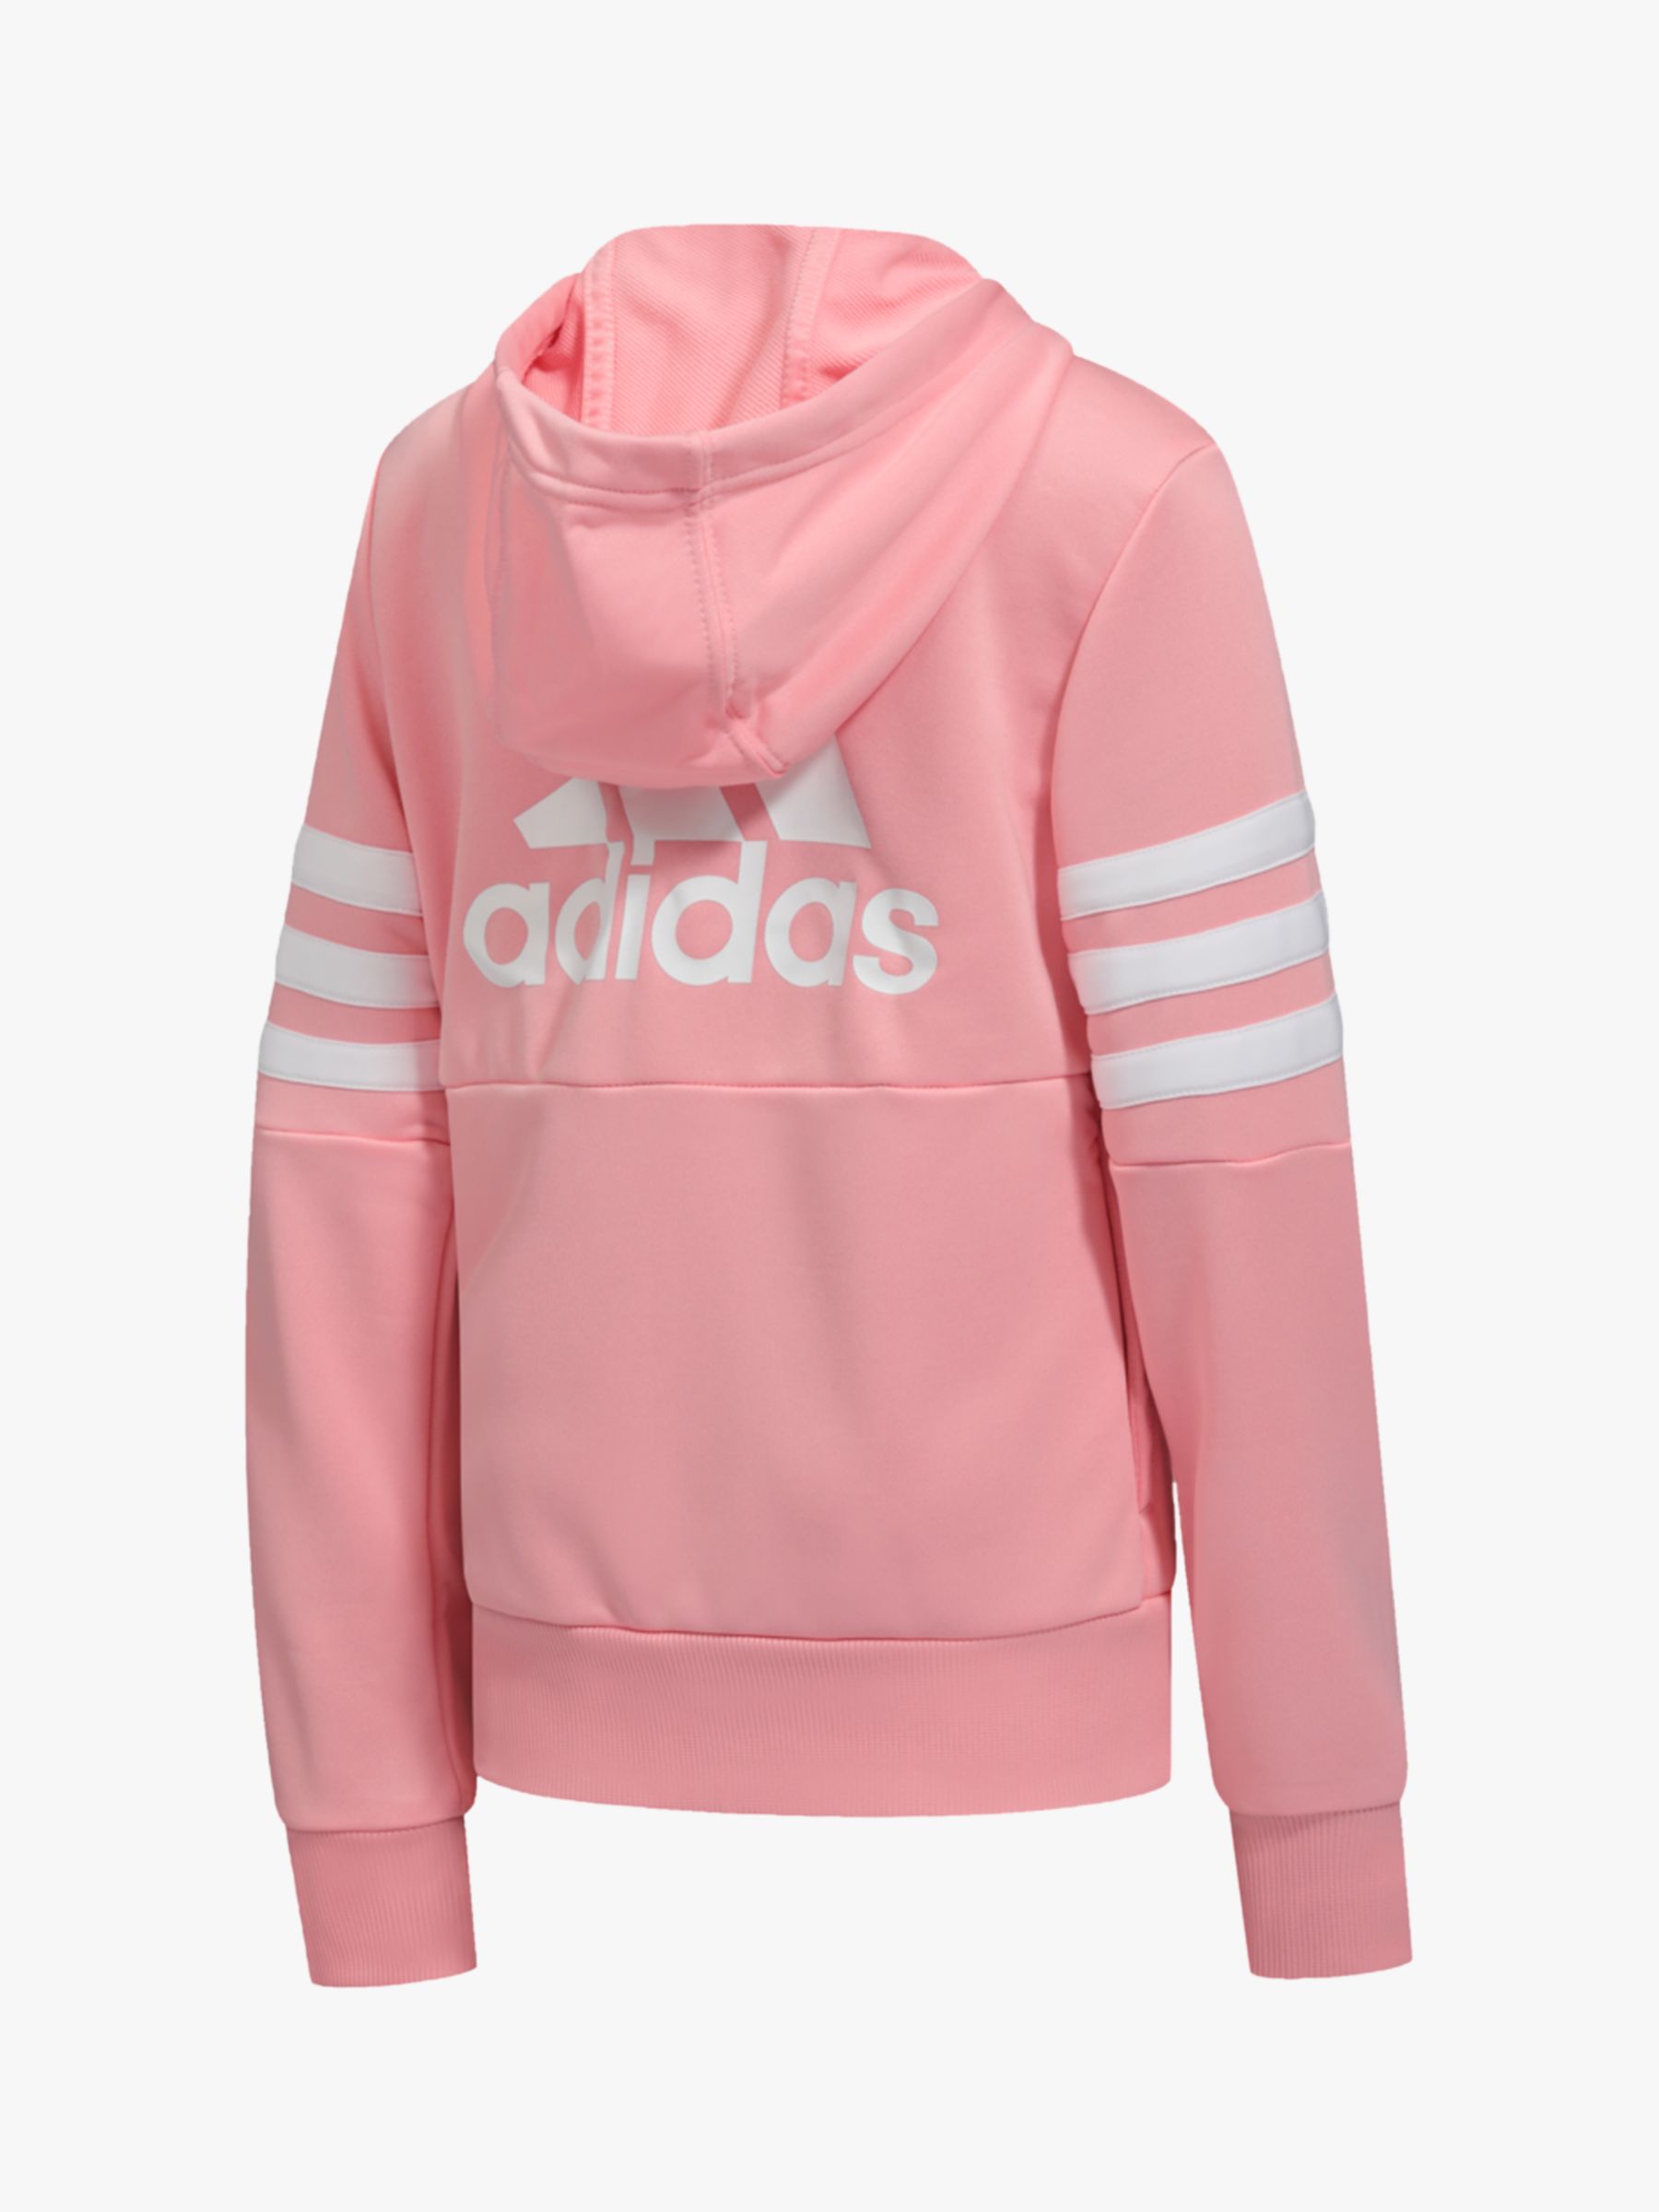 adidas girls pink tracksuit